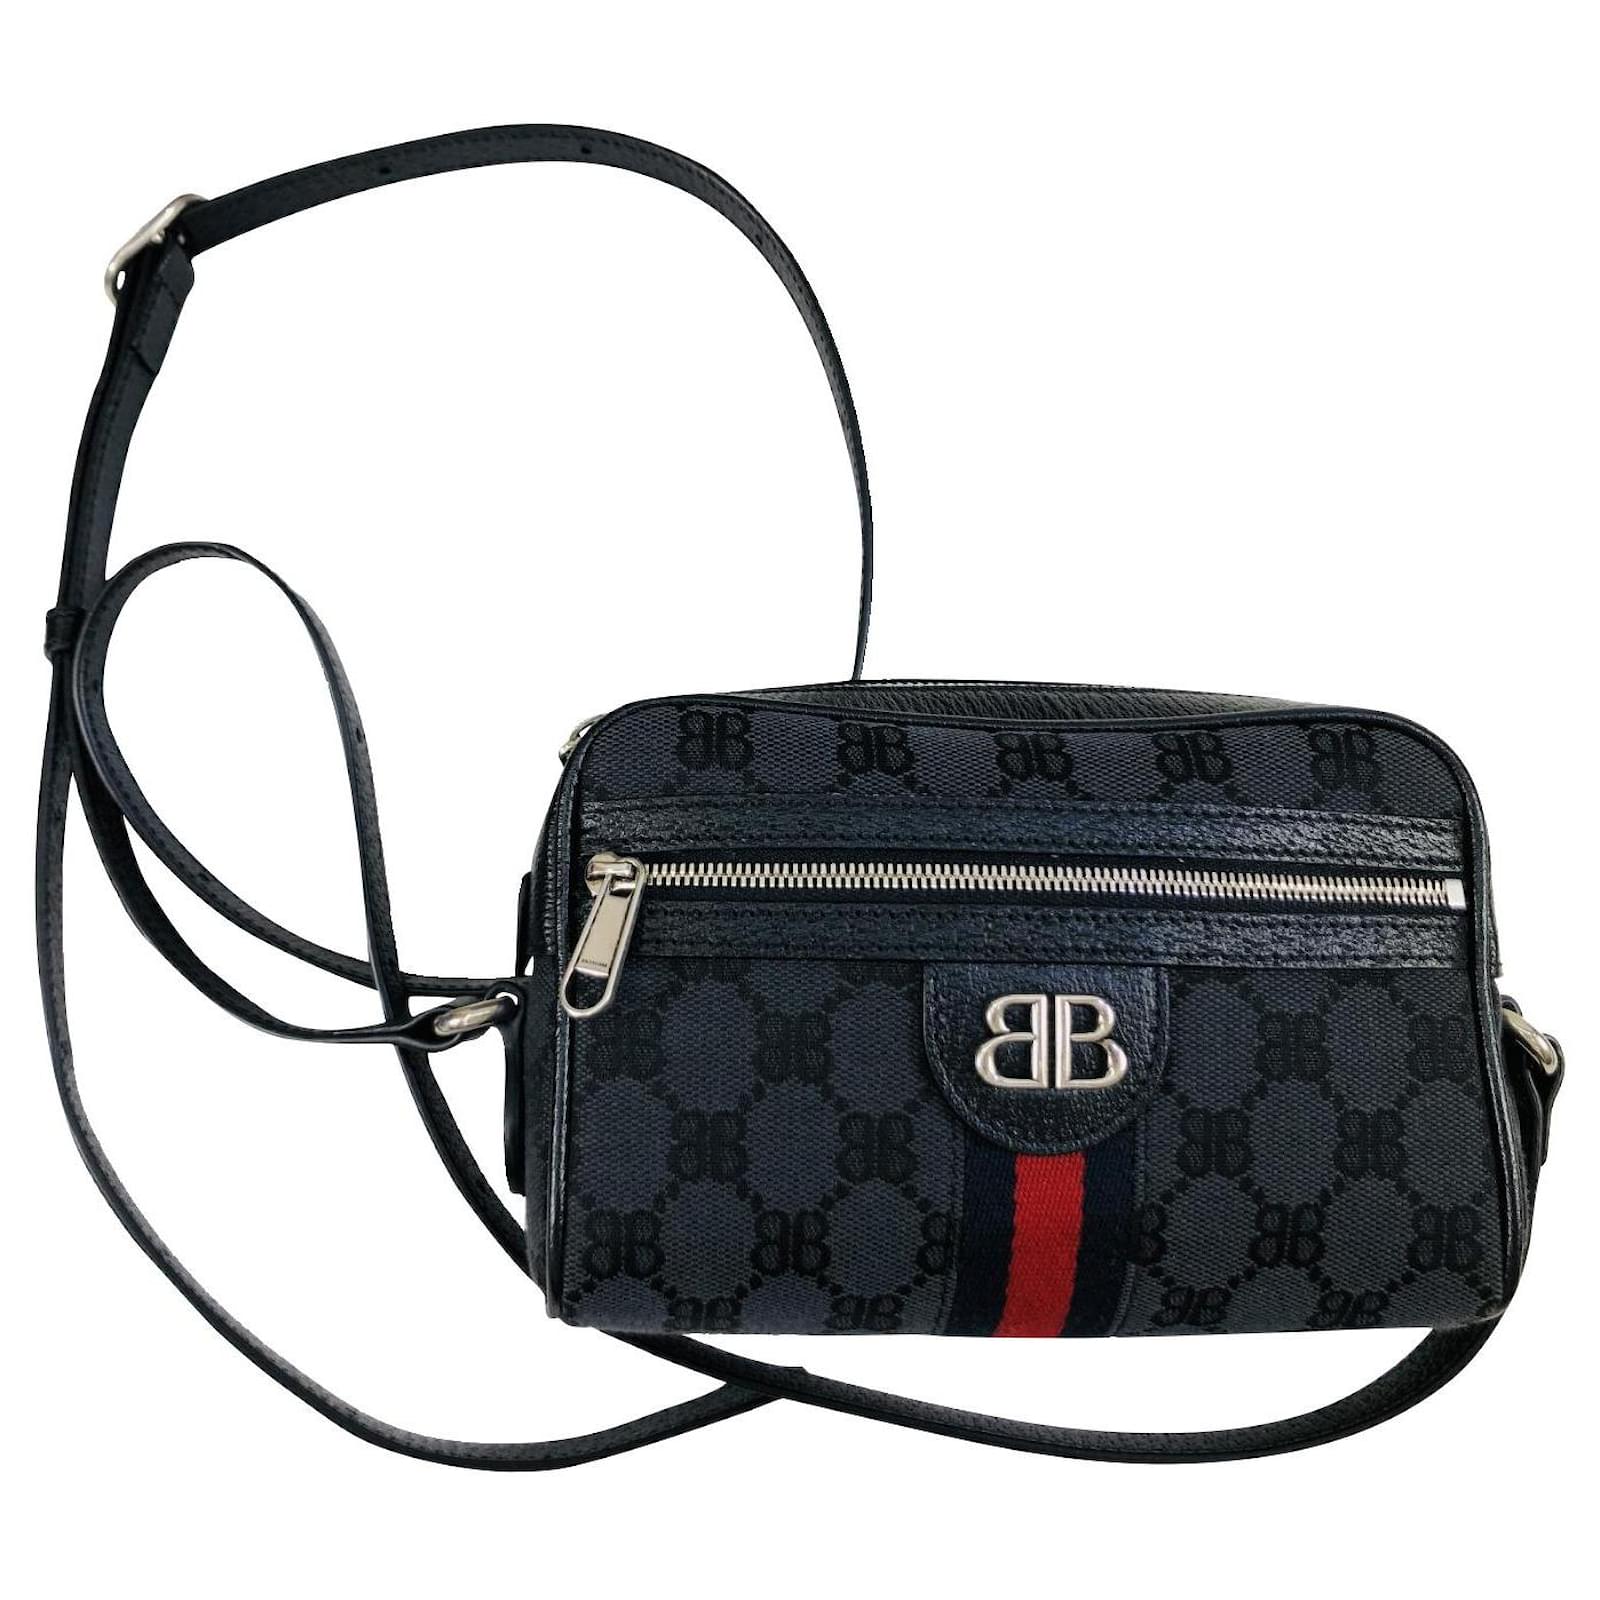 Authentic Balenciaga X Gucci The Hacker Project Monogram Jacquard Camera Bag